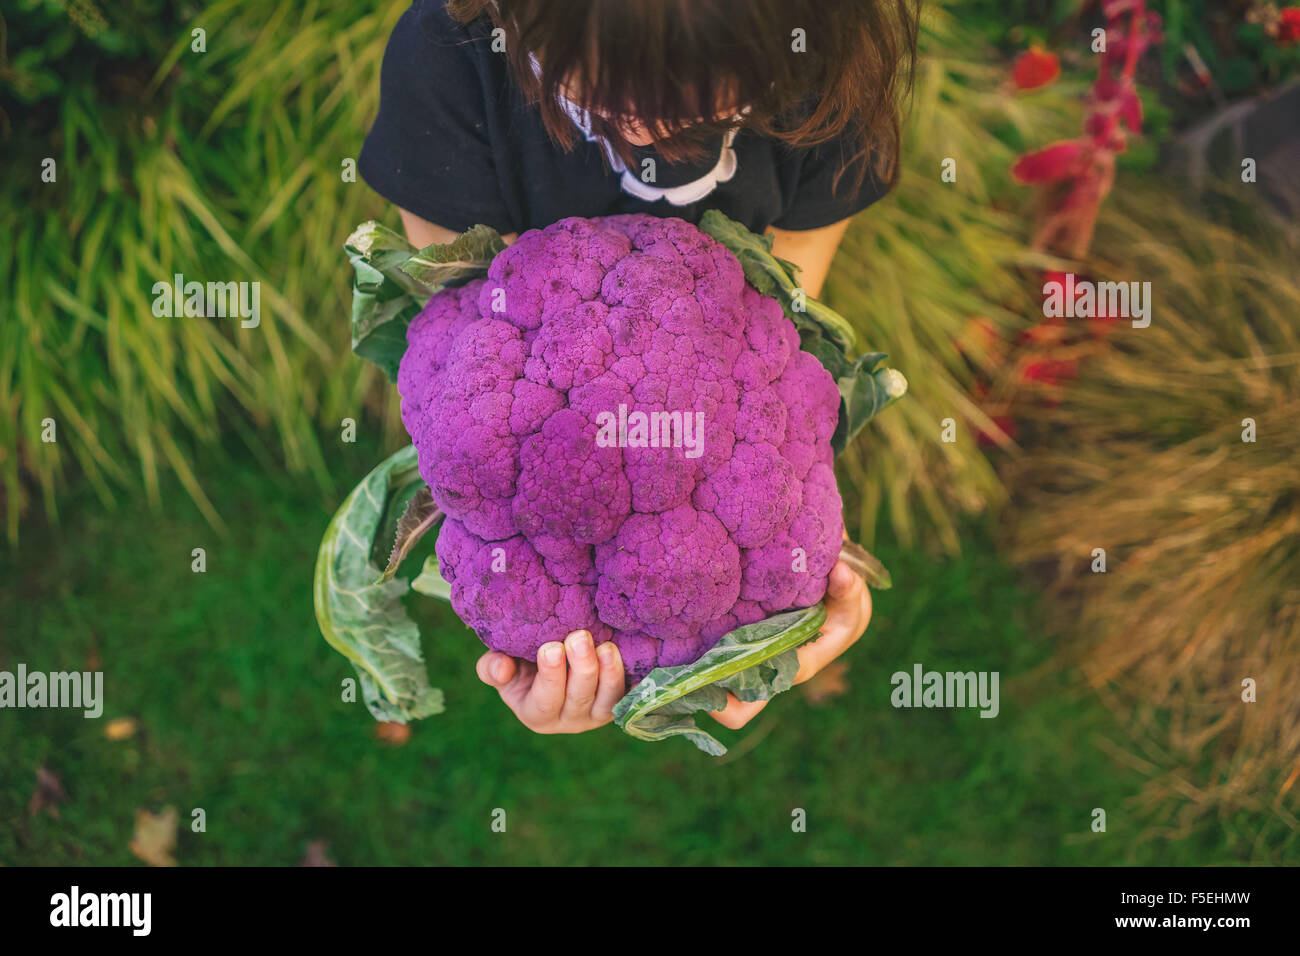 Elevated view of girl holding large purple cauliflower Stock Photo